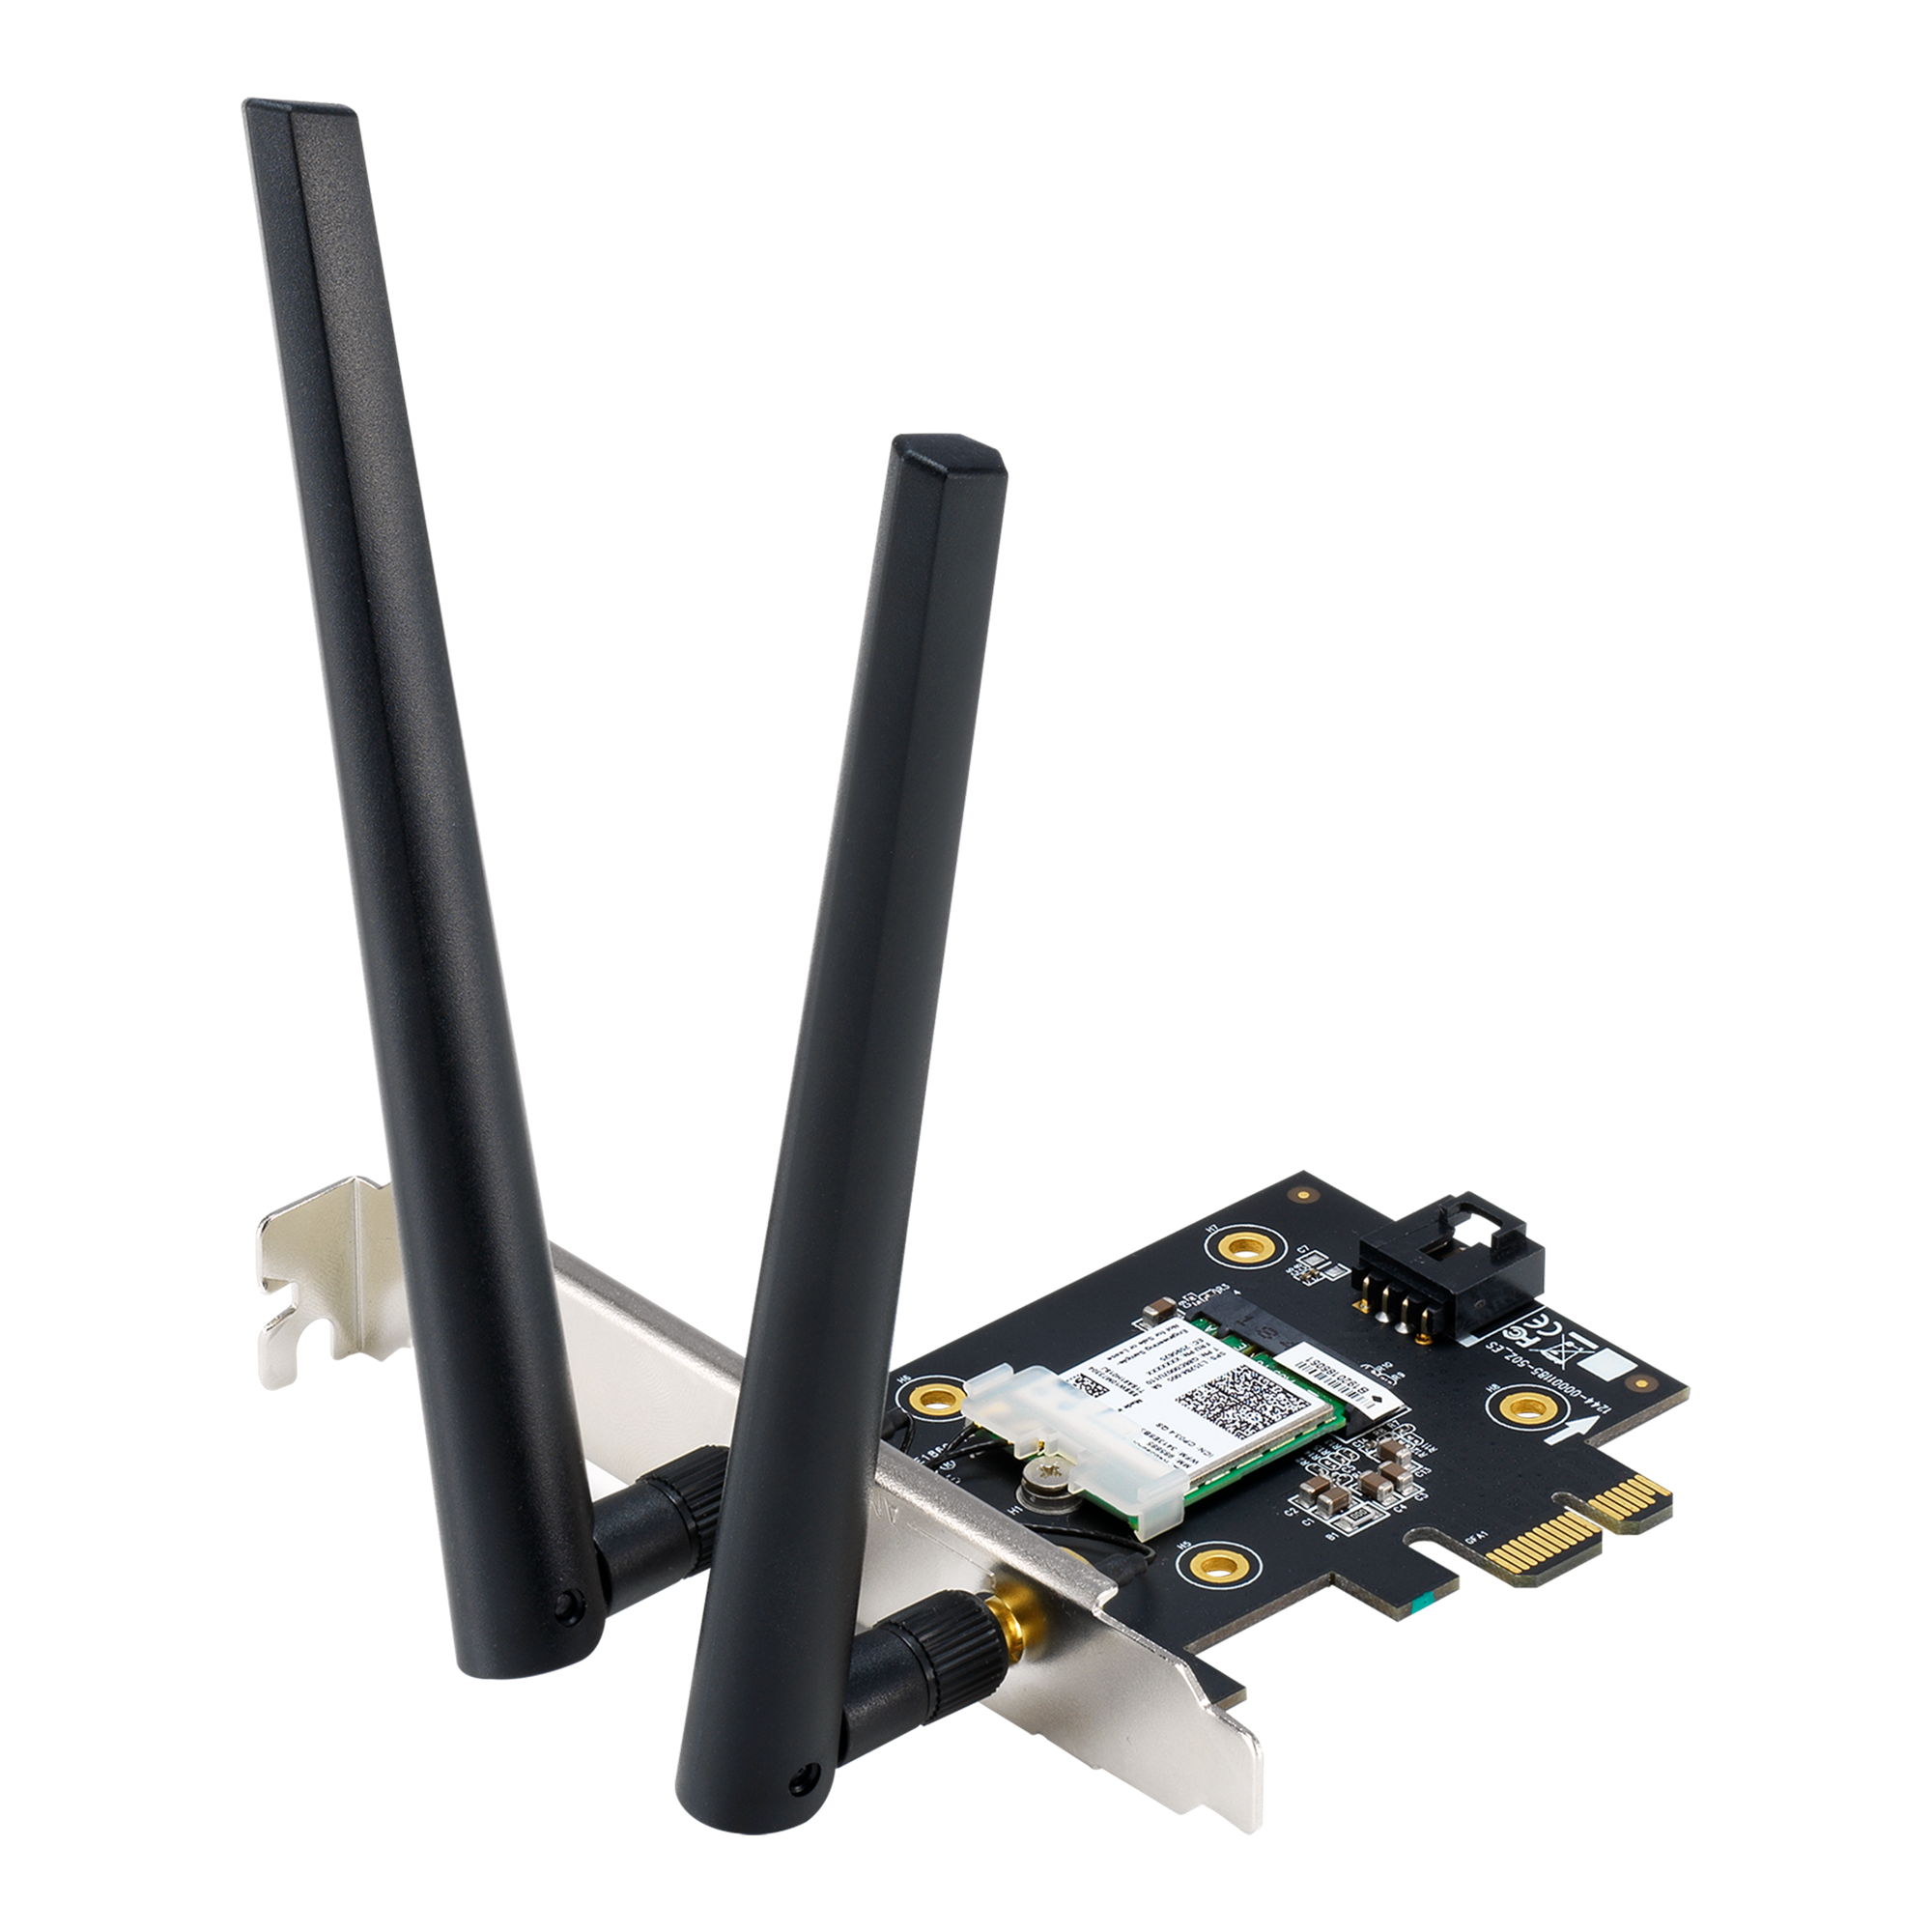 Carte WiFi PCI-E pour macOS 2.4 ghz, WLAN 802.11ac, WLAN, simple